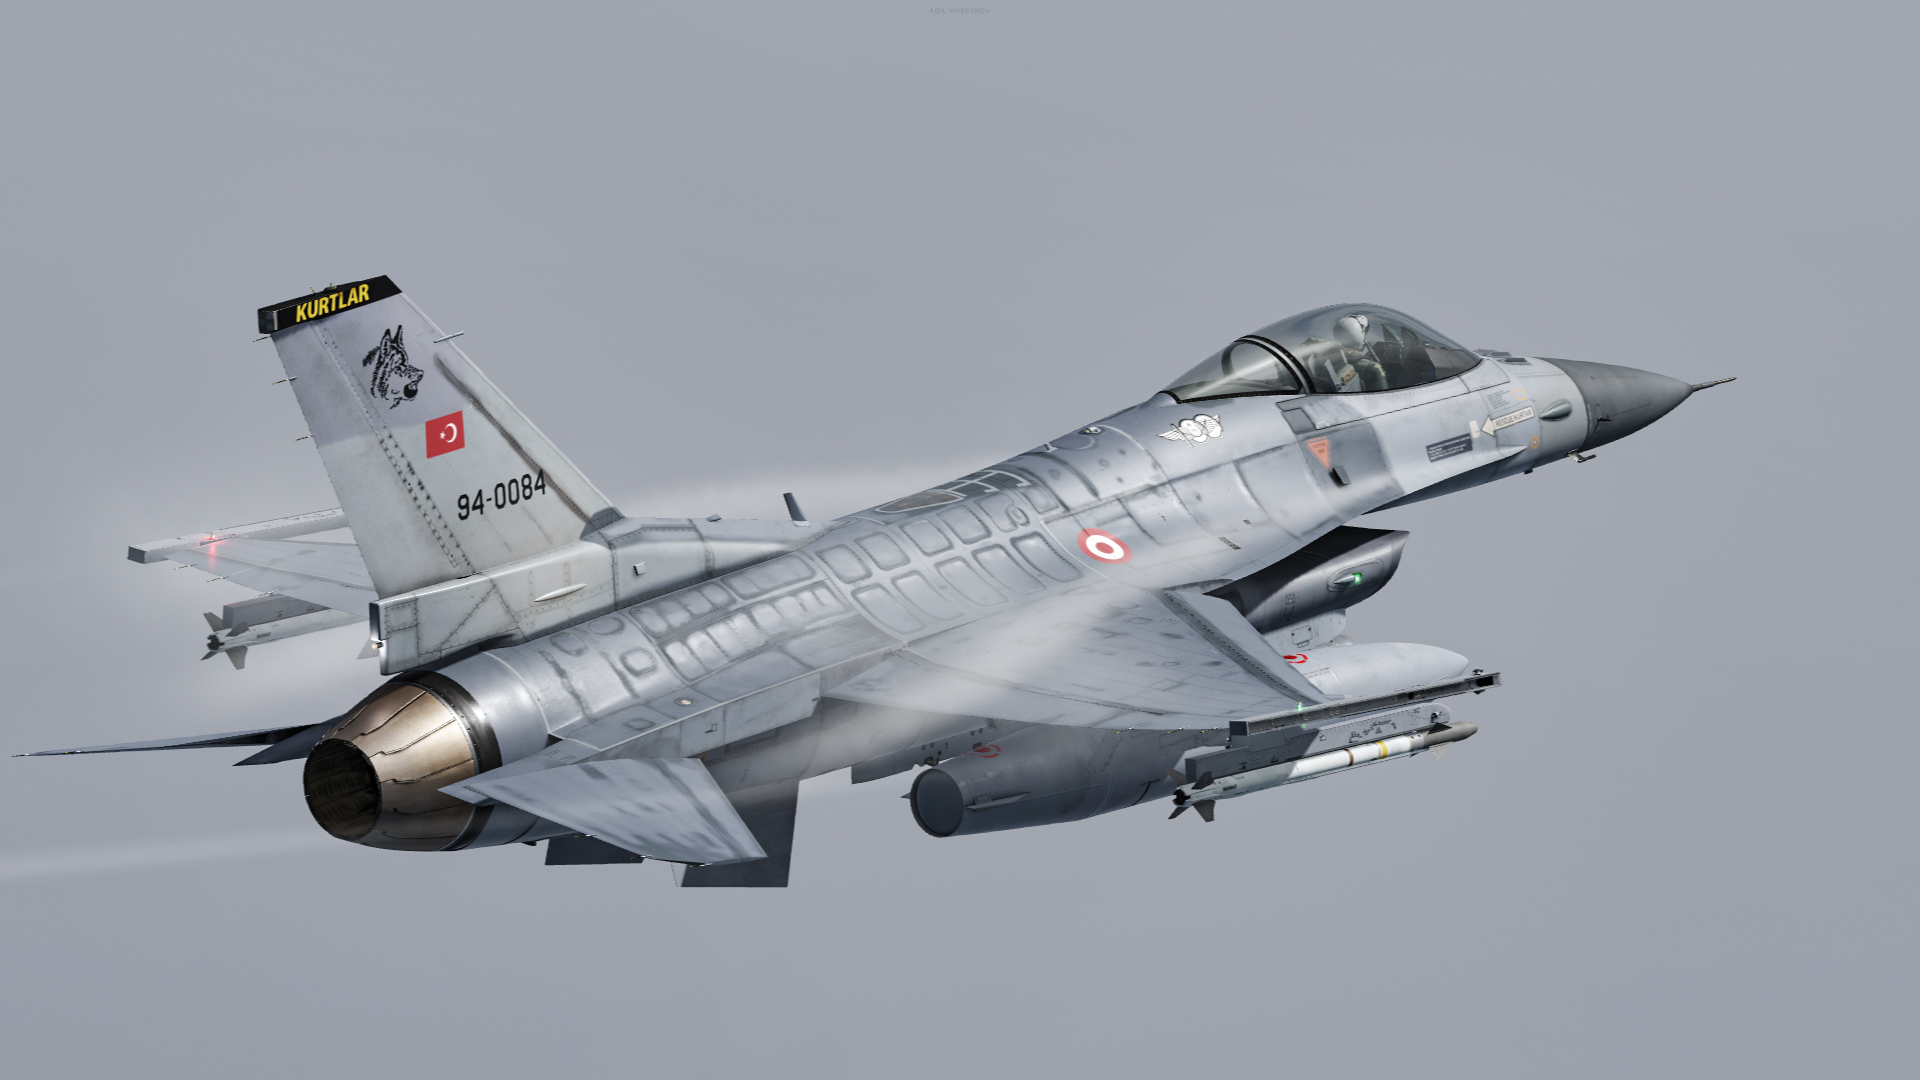 141. Kurt (Wolf) Weathered Turkish Air Force